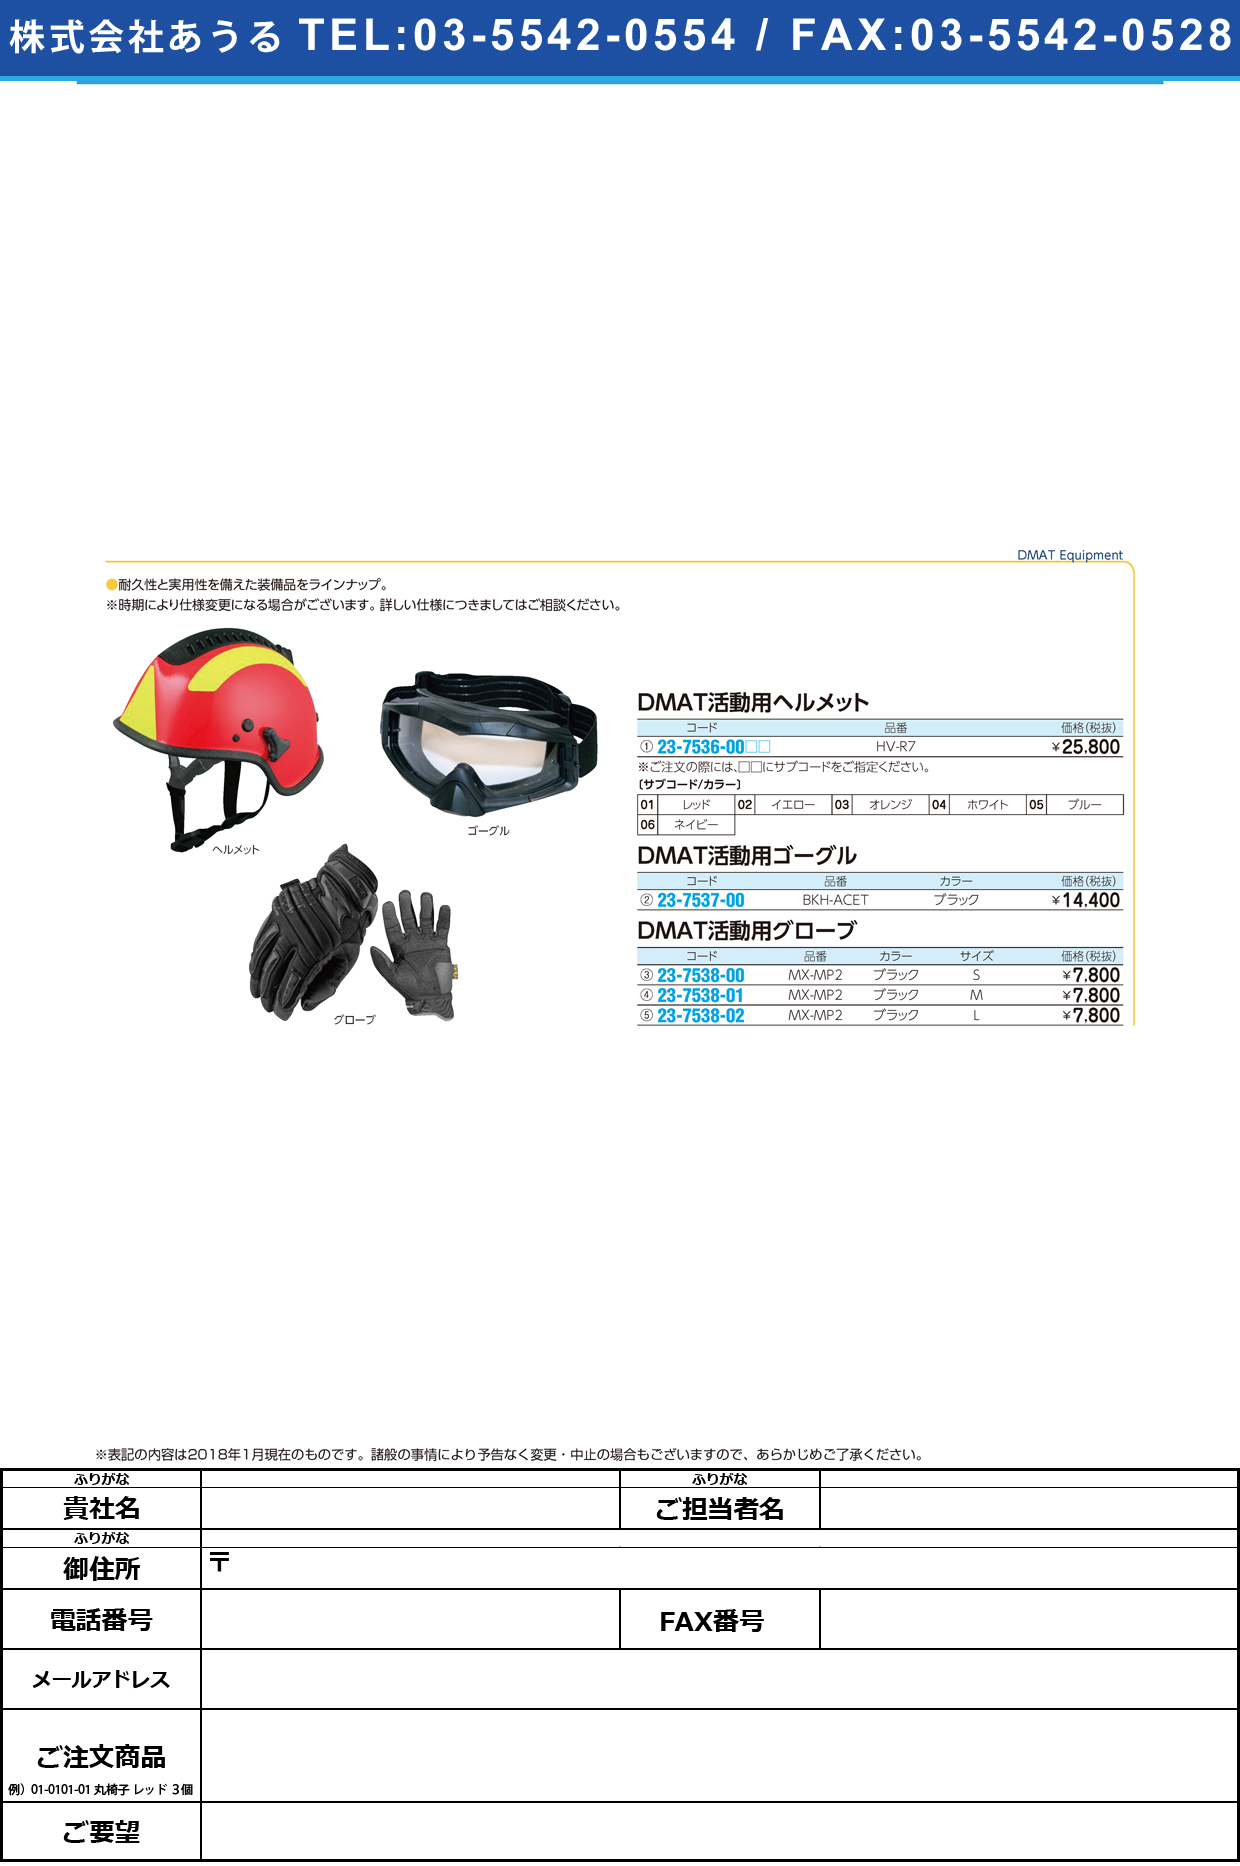 (23-7536-00)ＤＭＡＴ活動用ヘルメット HV-R7 DMATｶﾂﾄﾞｳﾖｳﾍﾙﾒｯﾄ イエロー【1個単位】【2018年カタログ商品】